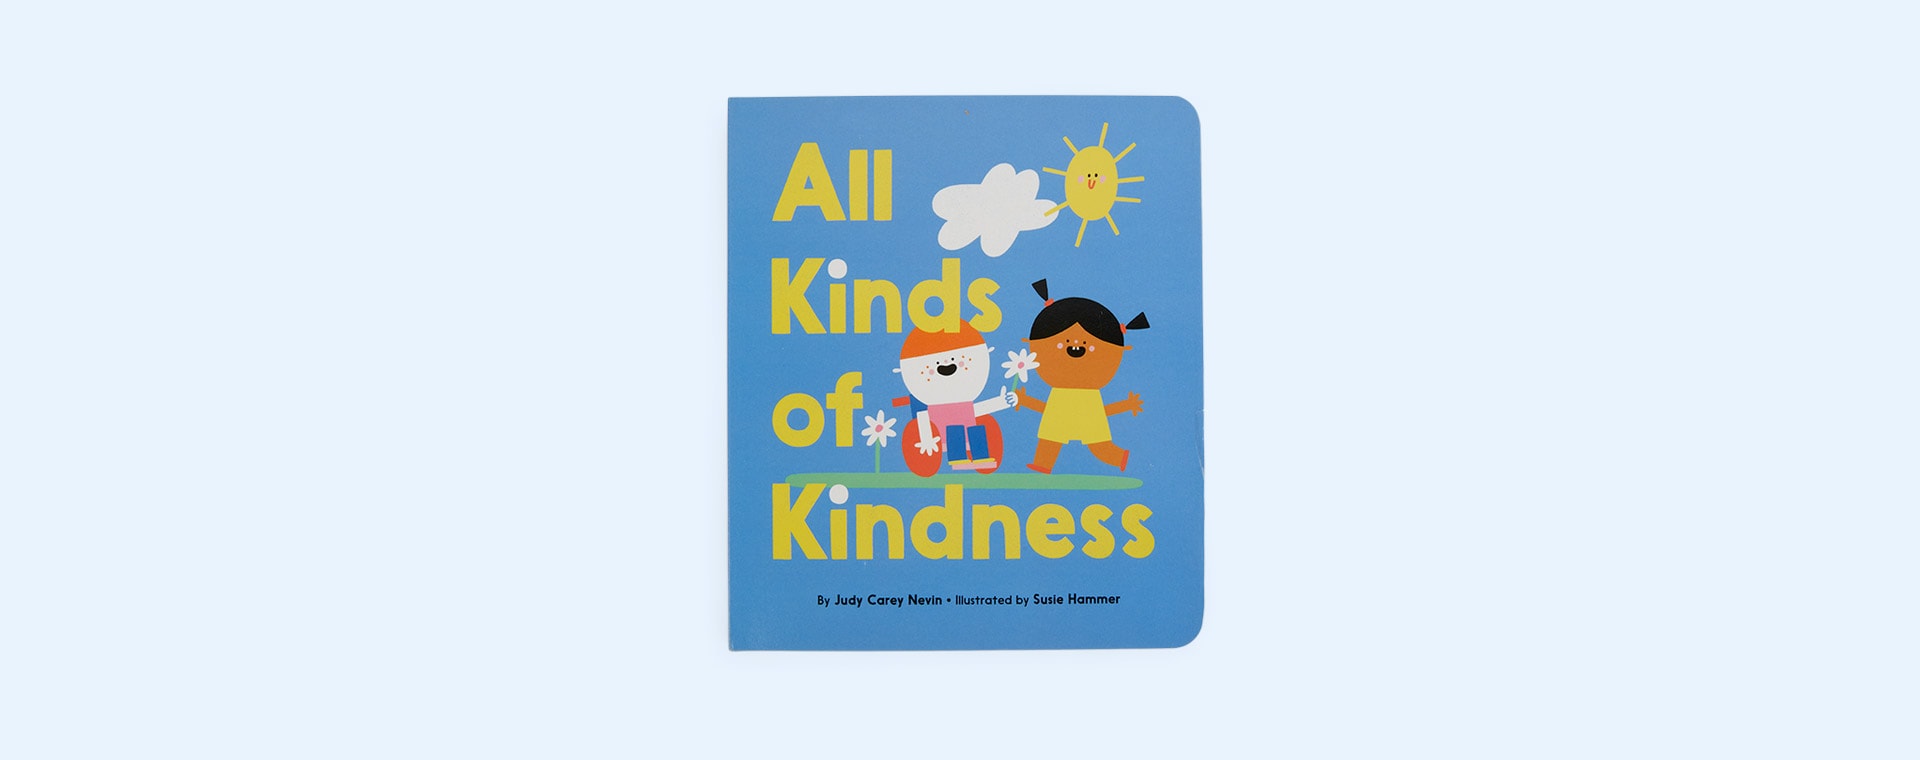 Multi bookspeed All Kinds Of Kindness